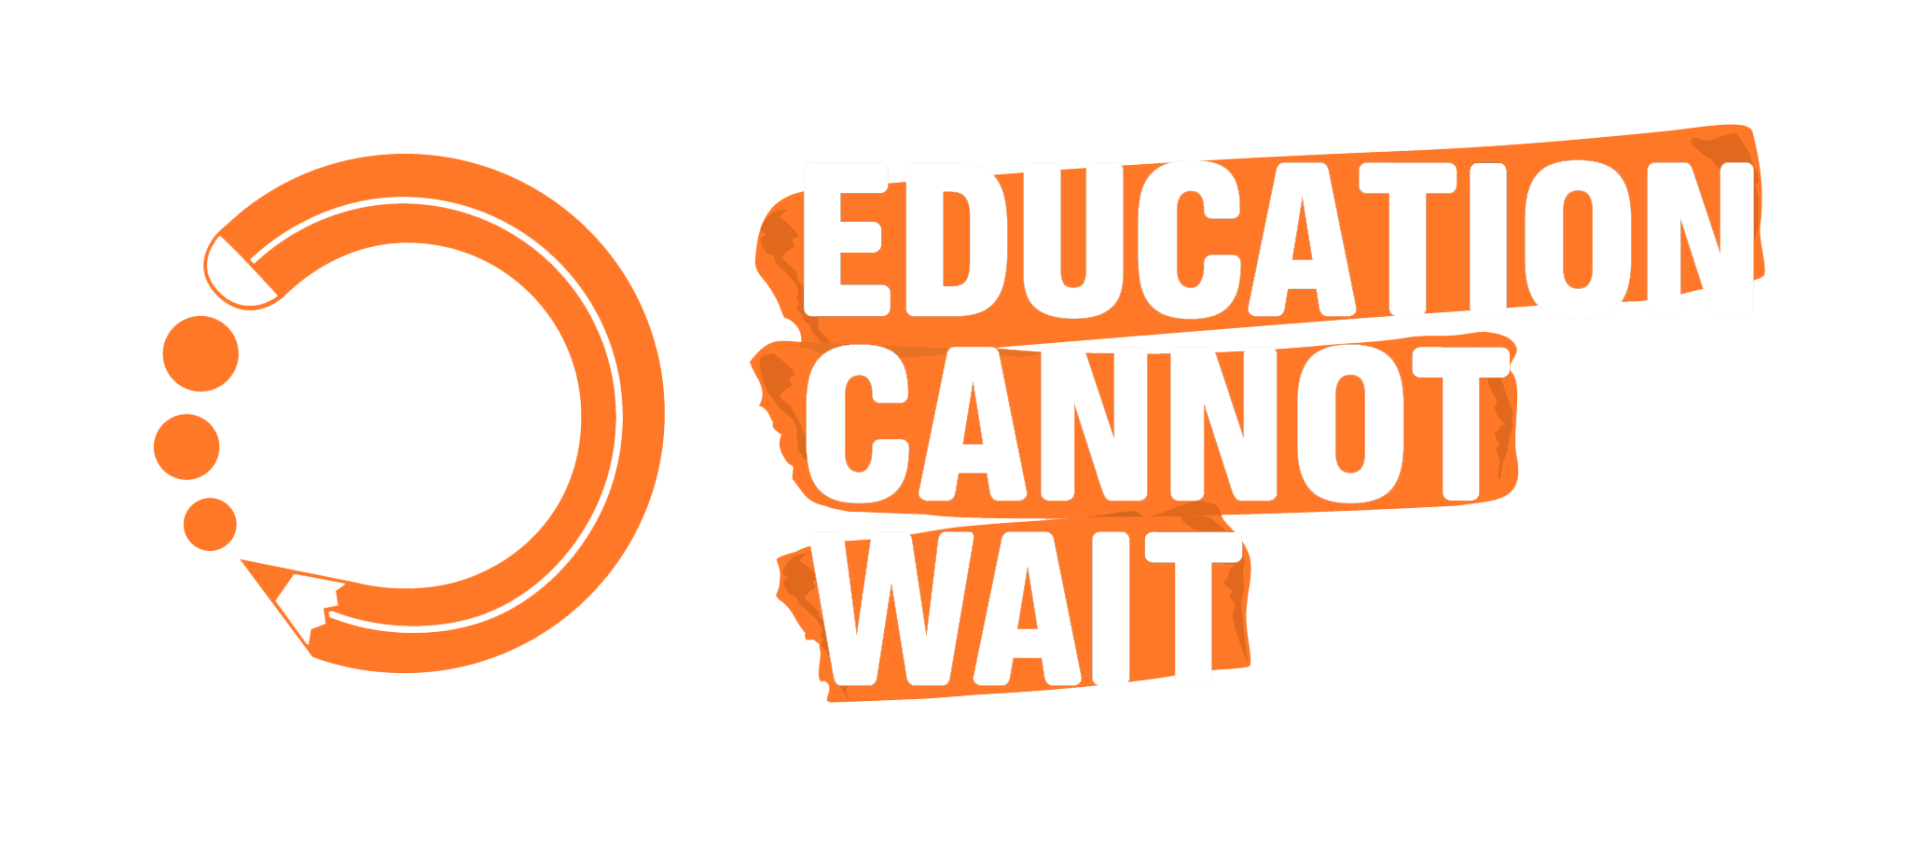 Education Cannot Wait